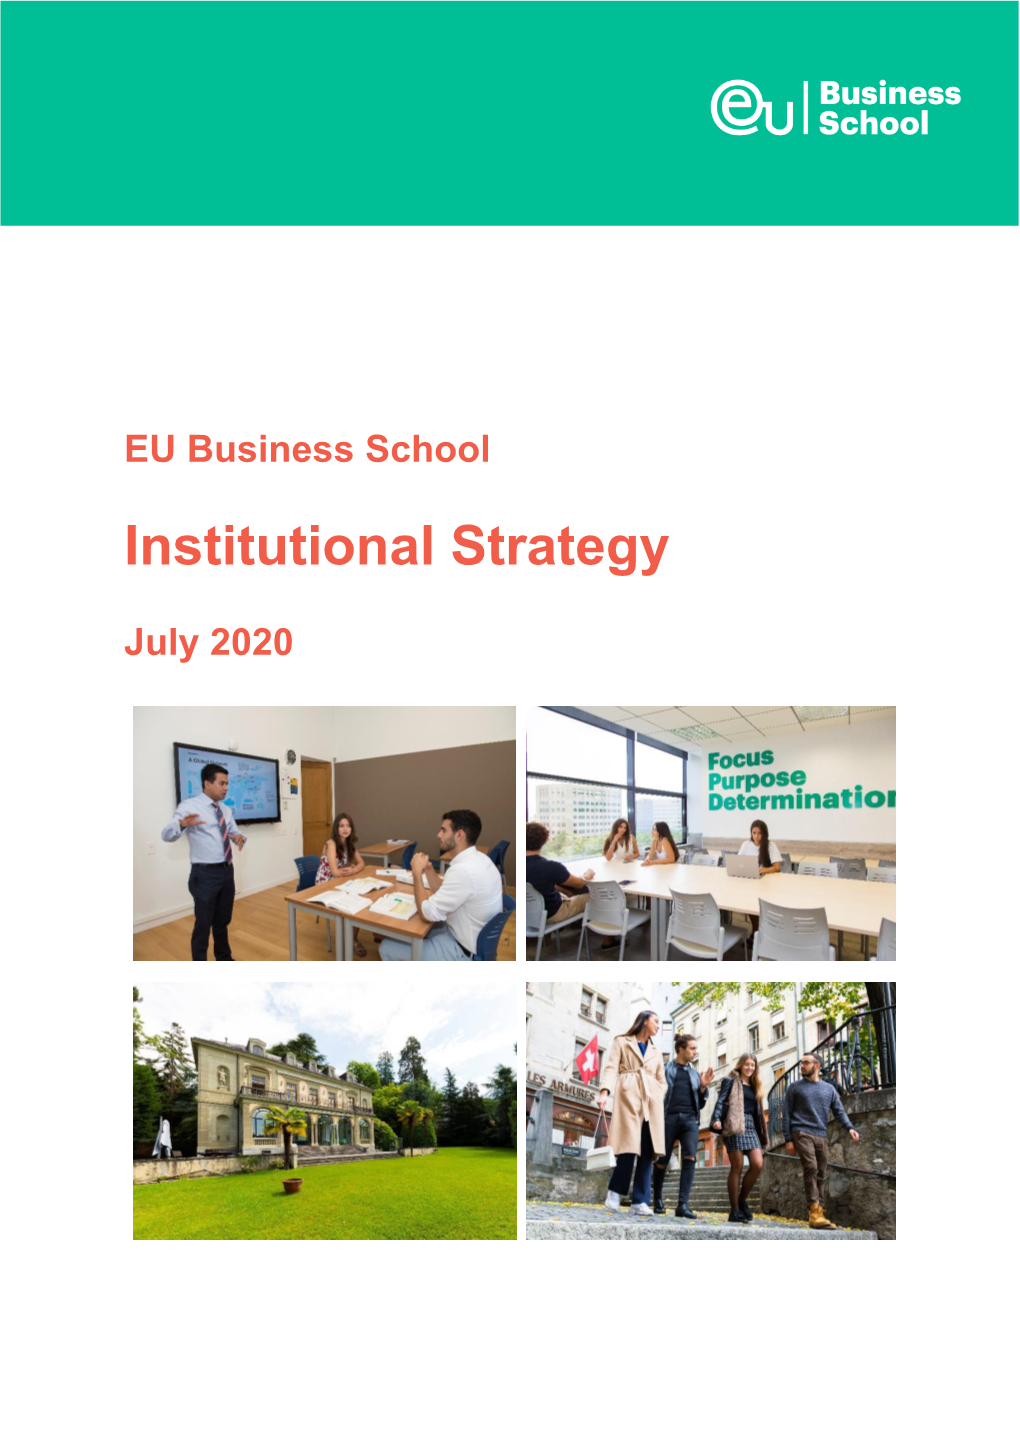 EU Business School Institutional Strategy 2020